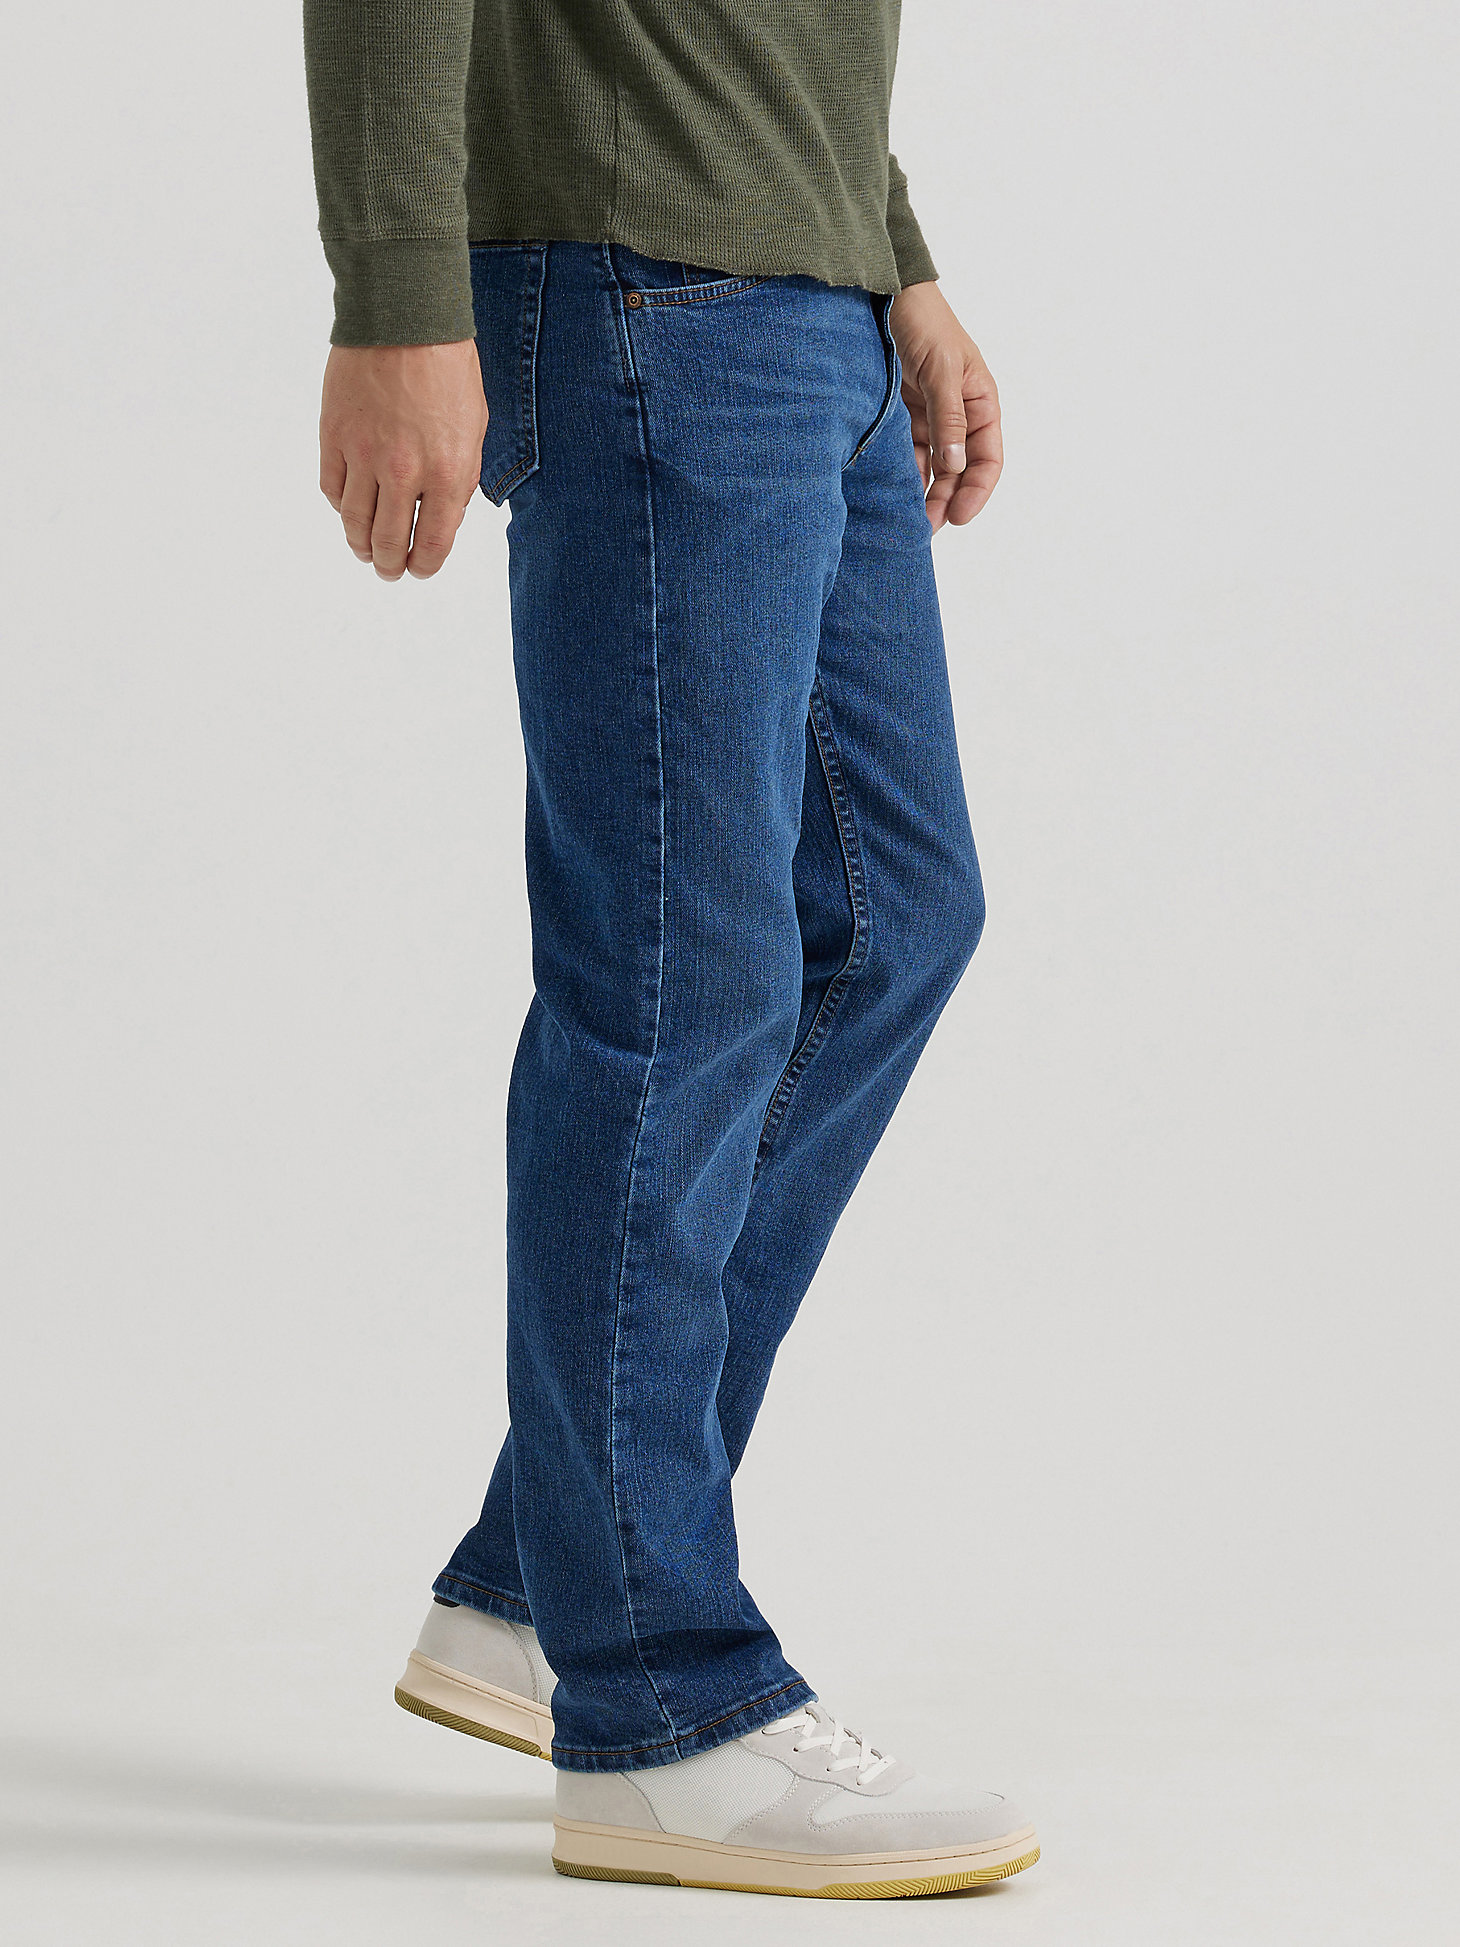 Wrangler® Five Star Premium Denim Flex For Comfort Regular Fit Jean in Dark Stonewash alternative view 3